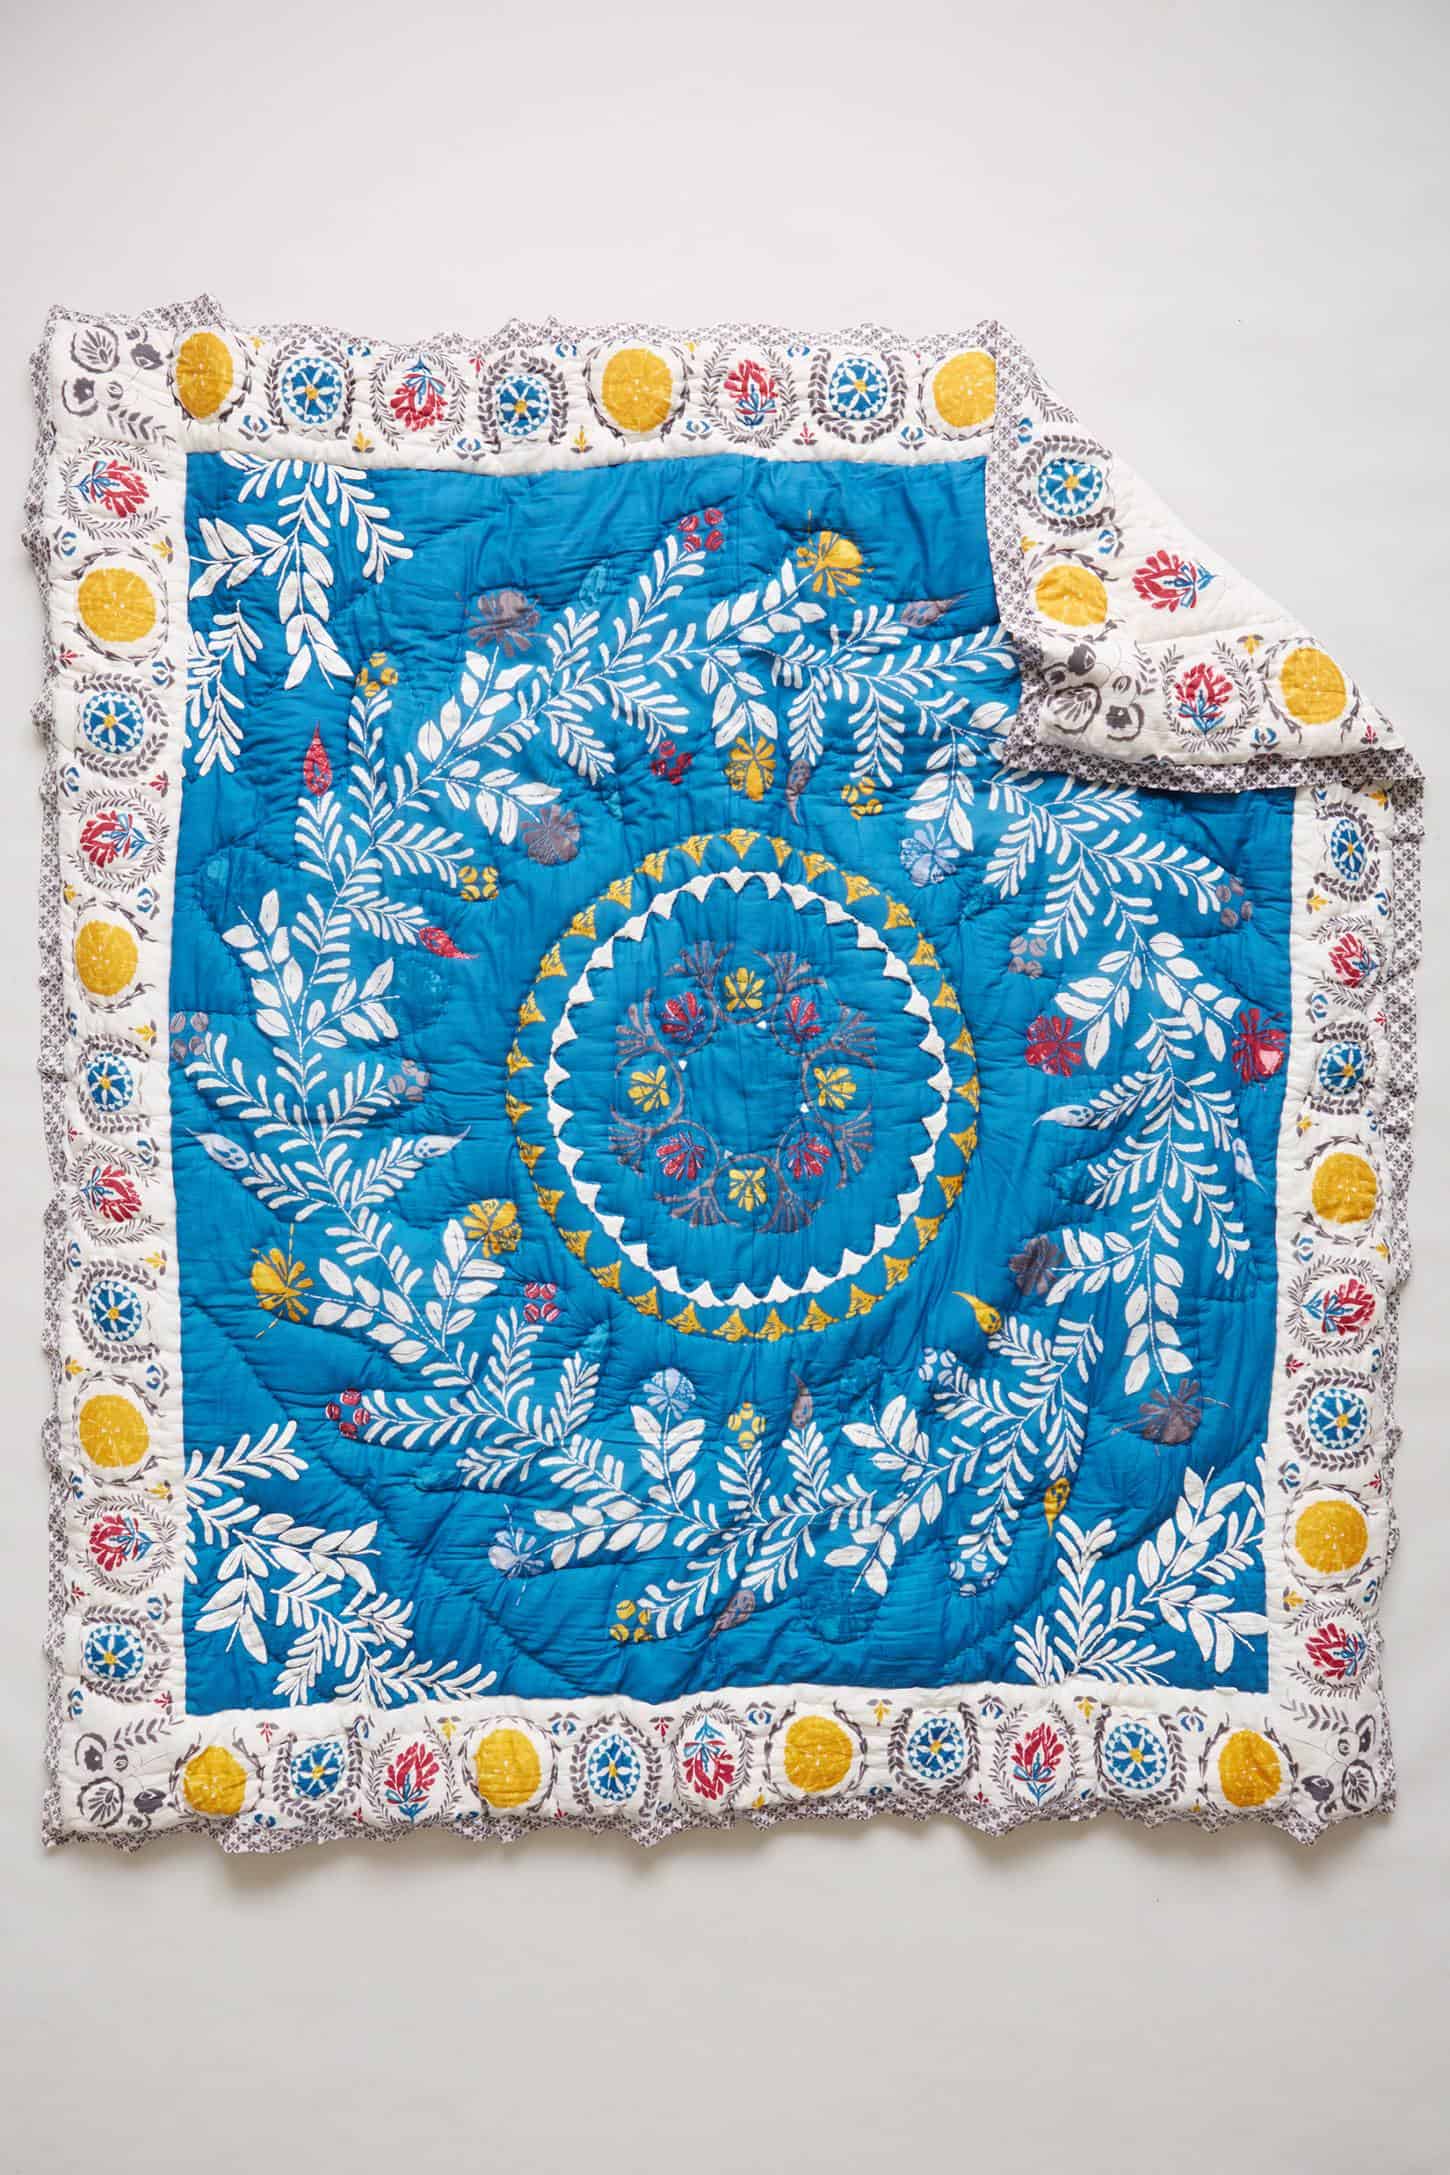 zocalo-embroidered-quilt-anthropologie-3.jpg